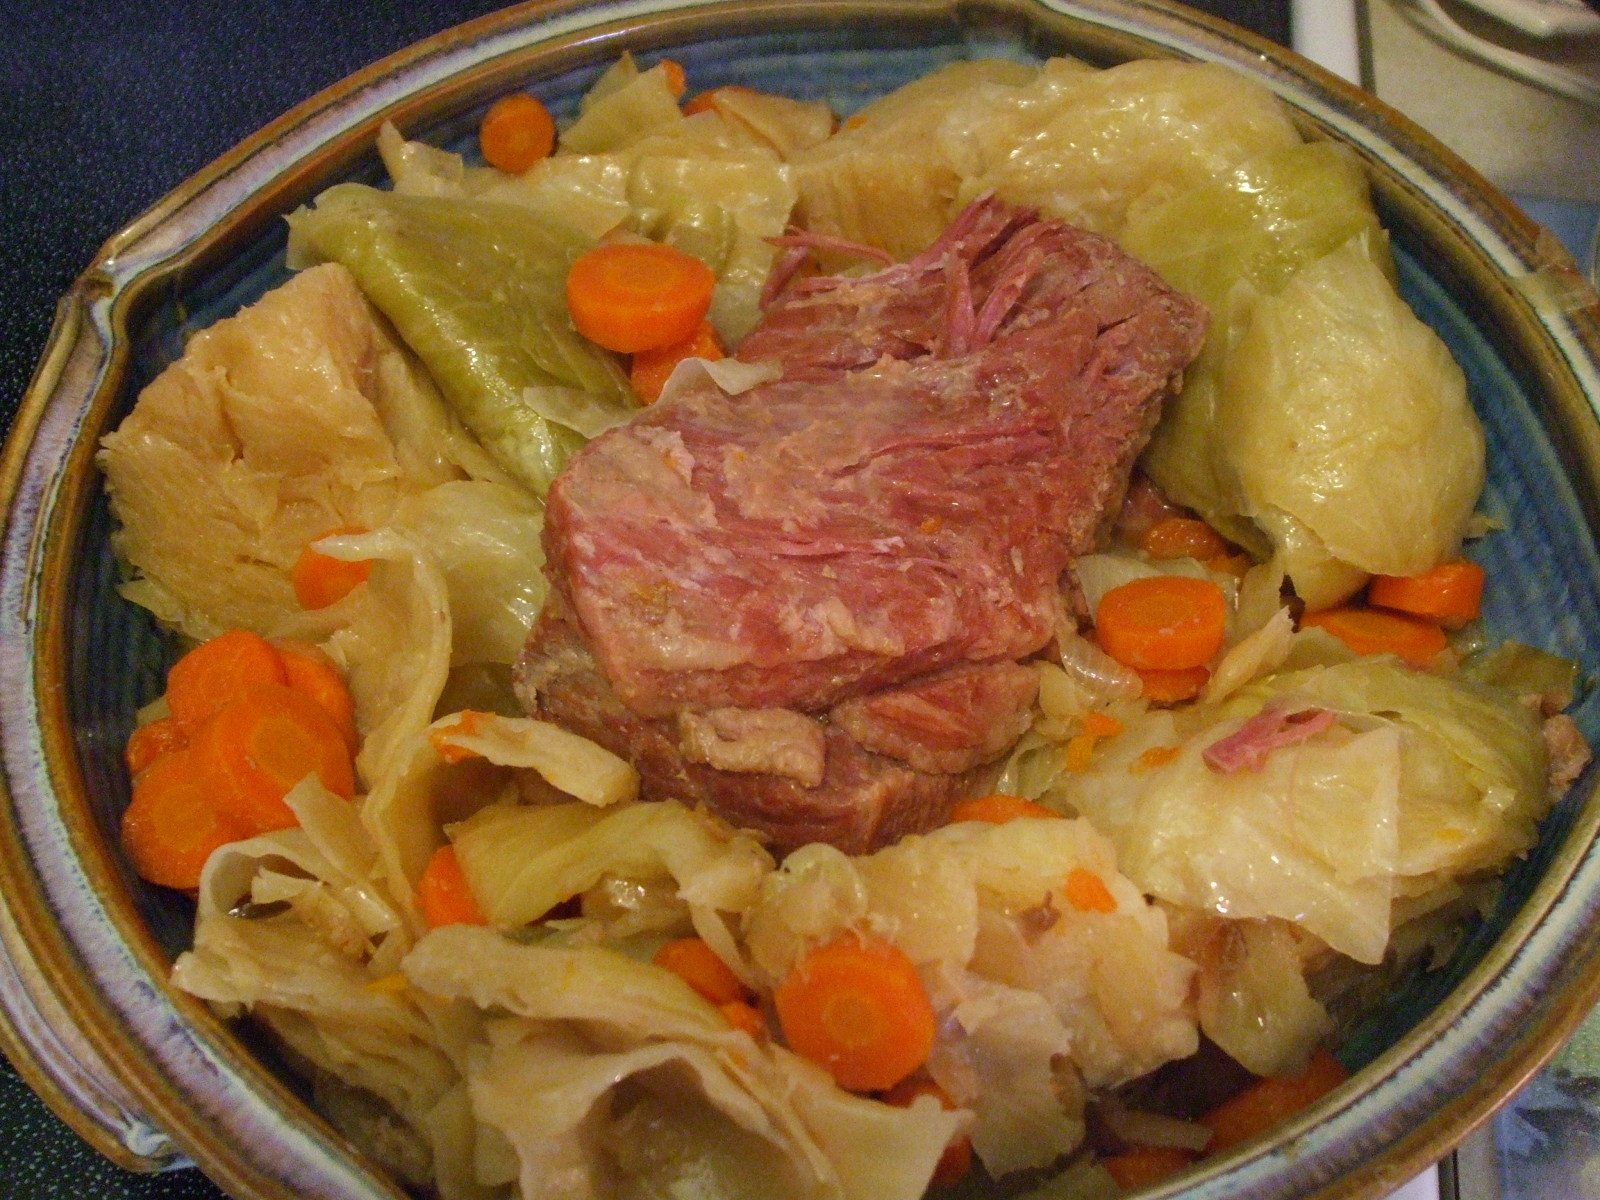 Crock Pot Corned Beef And Cabbage
 Crock Pot Corned Beef And Cabbage Recipe — Dishmaps